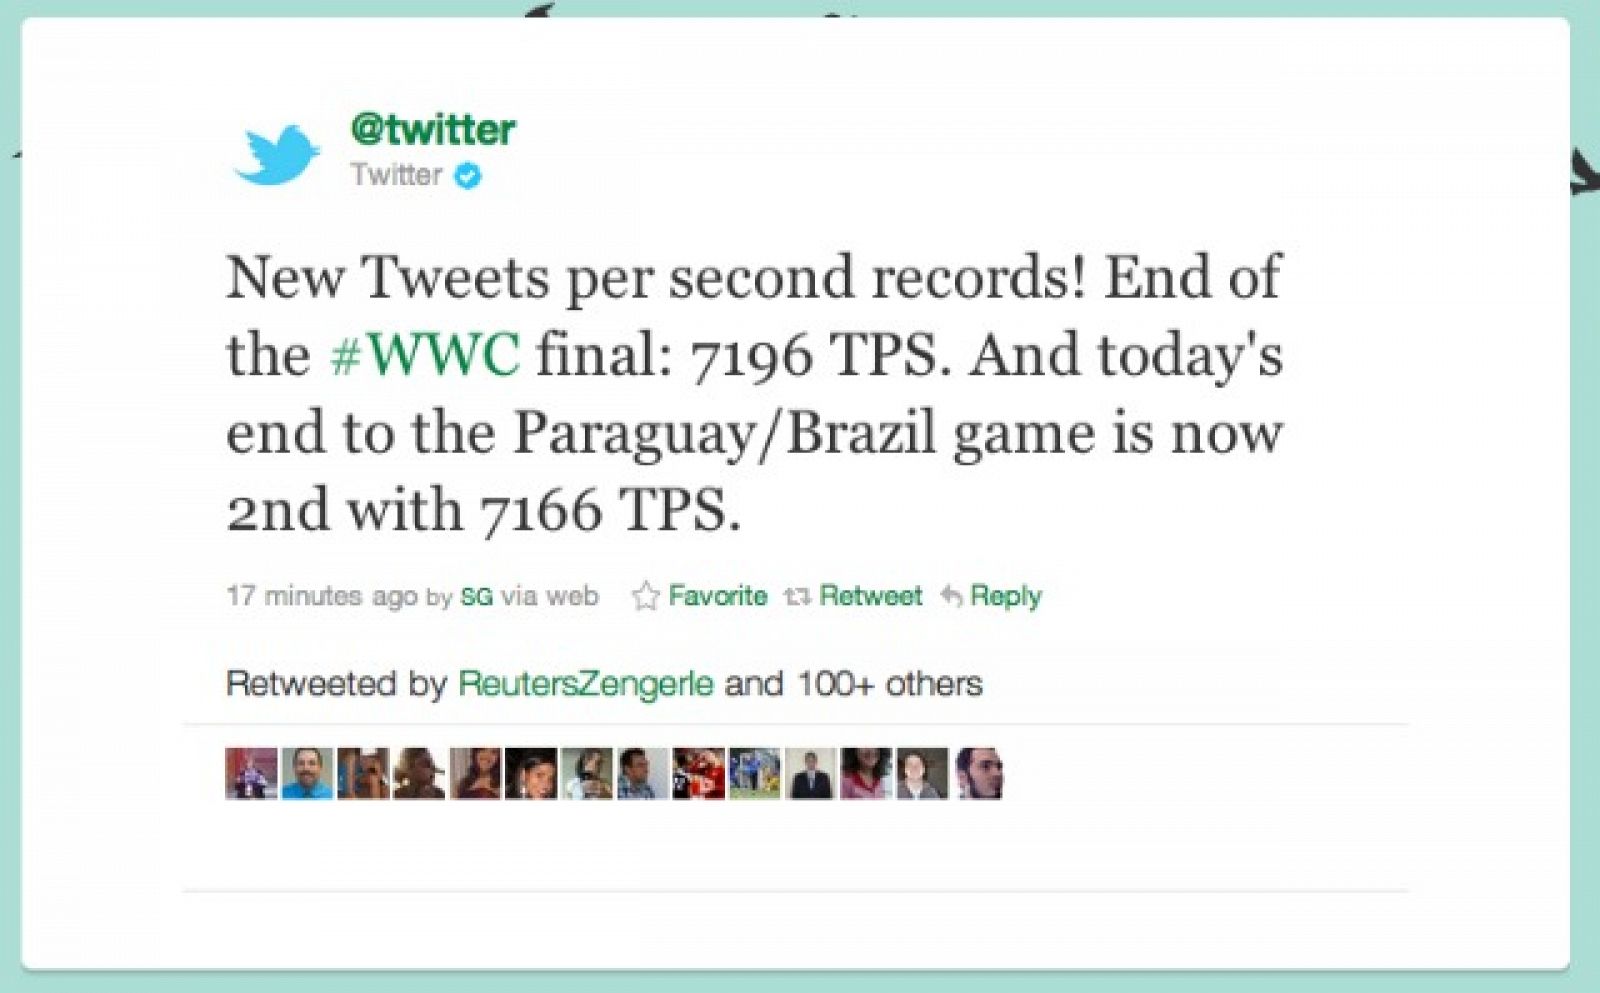 El futbol femenino bate récords en Twitter